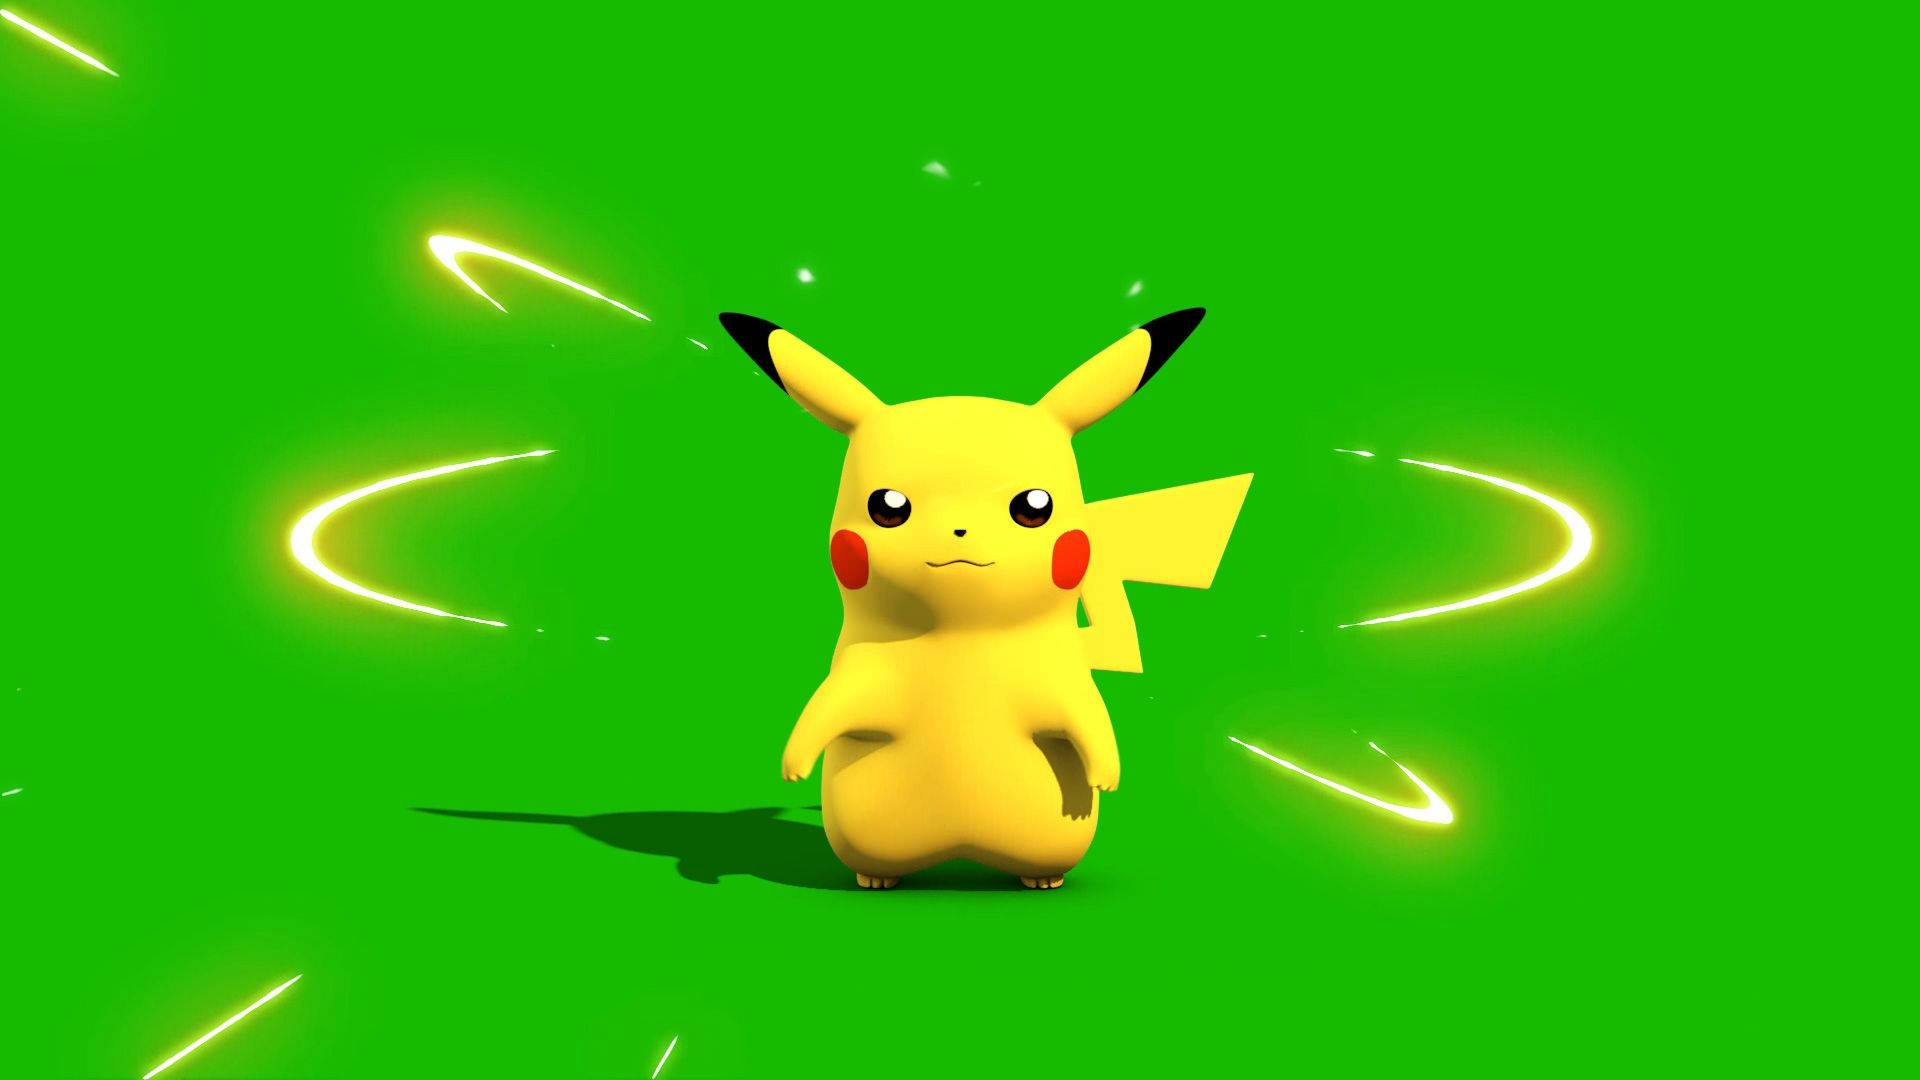 Pikachu 3d Pokémon Digital Model Wallpaper